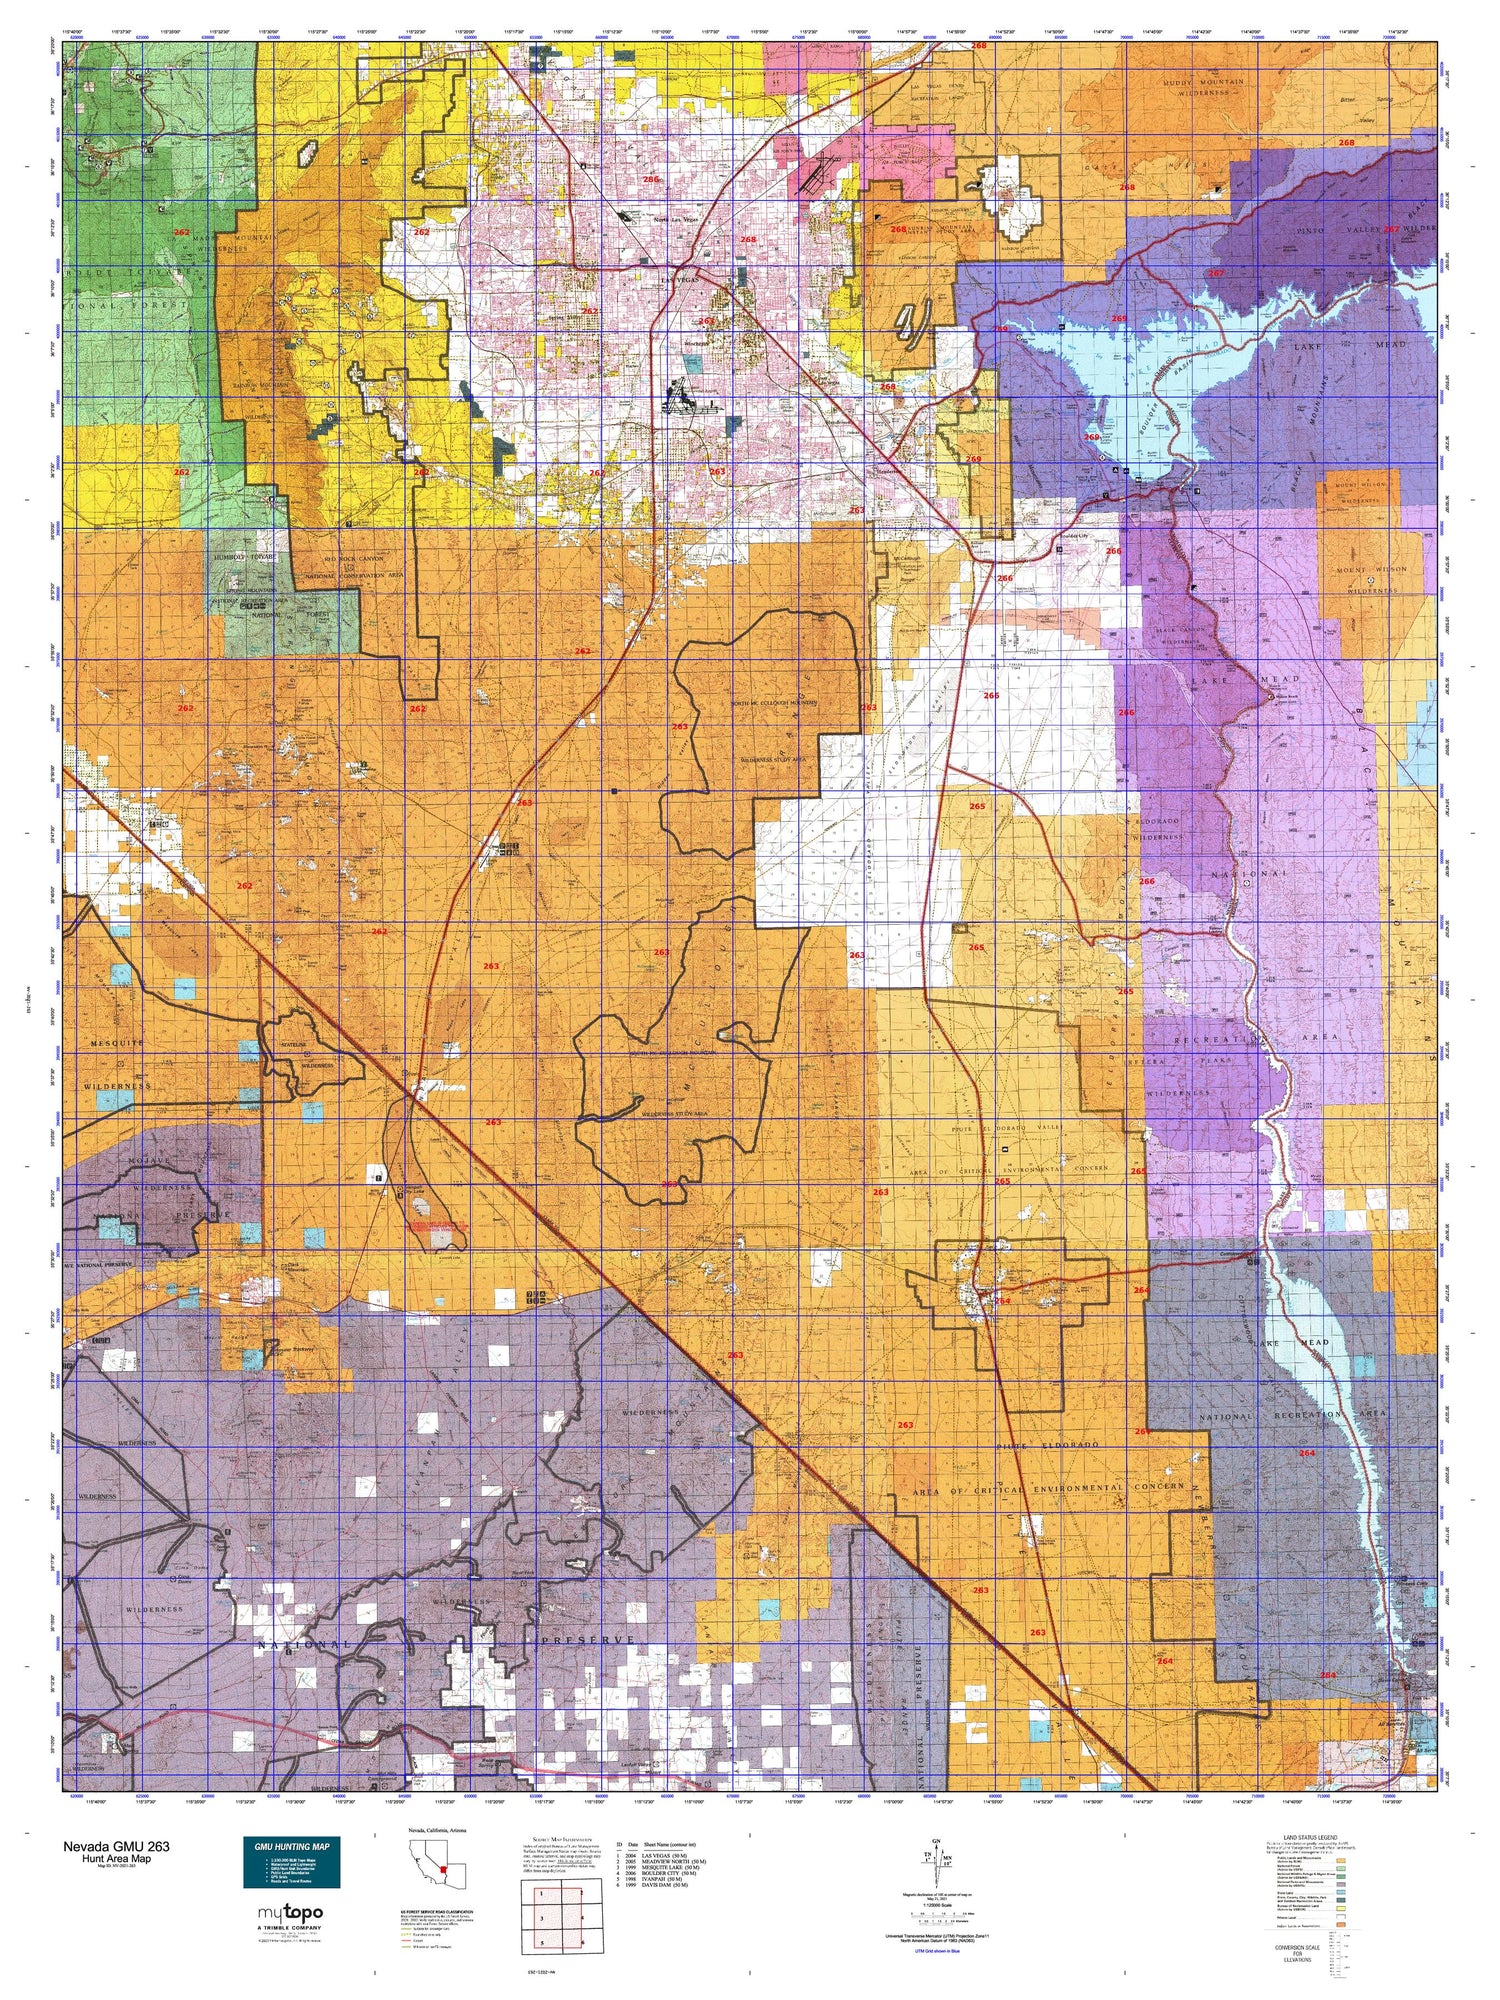 Nevada GMU 263 Map Image